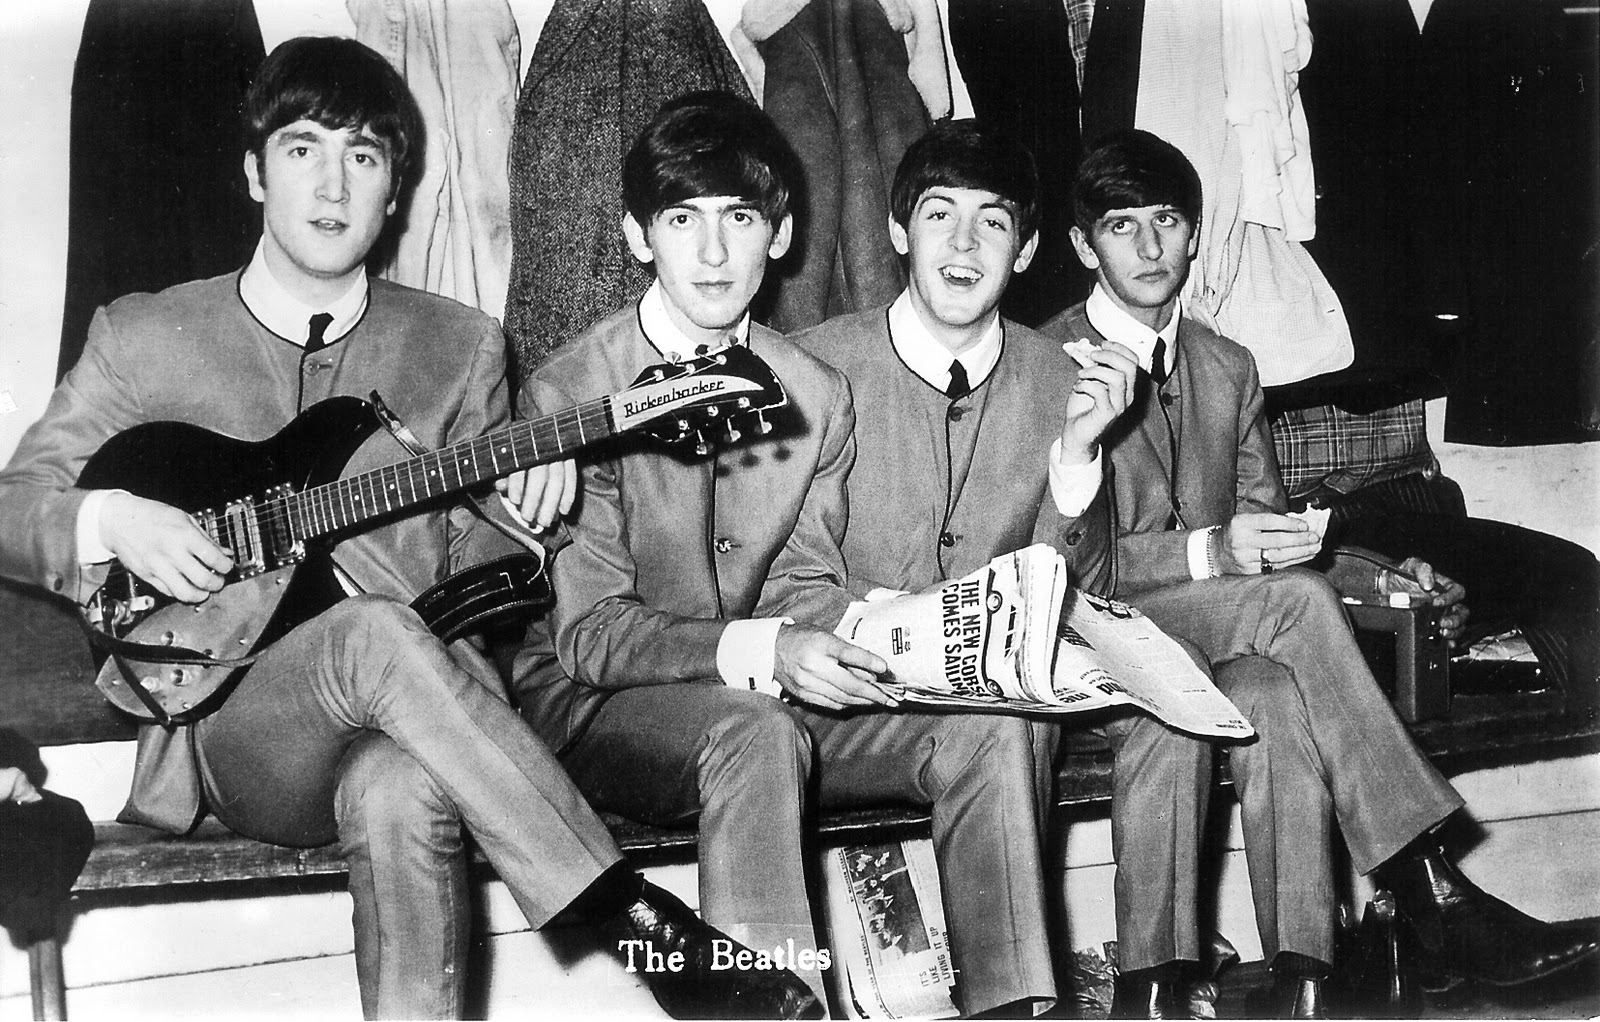 The Beatles, 1963 - ビートルズ 写真 (31890892) - ファンポップ